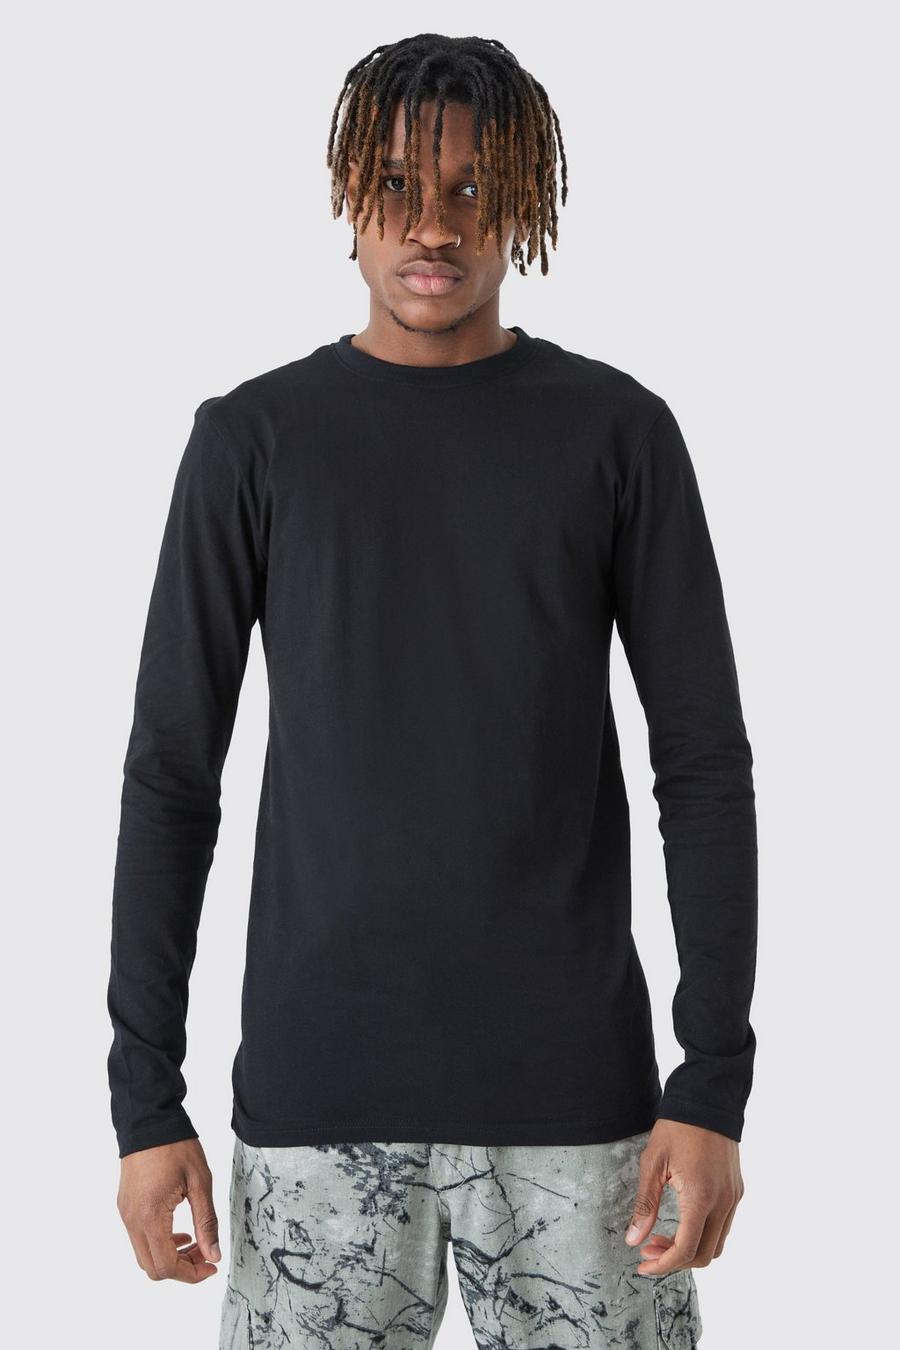 Black Topman Sweatshirt aus Cord in Schwarz mit halblangem Reißverschluss